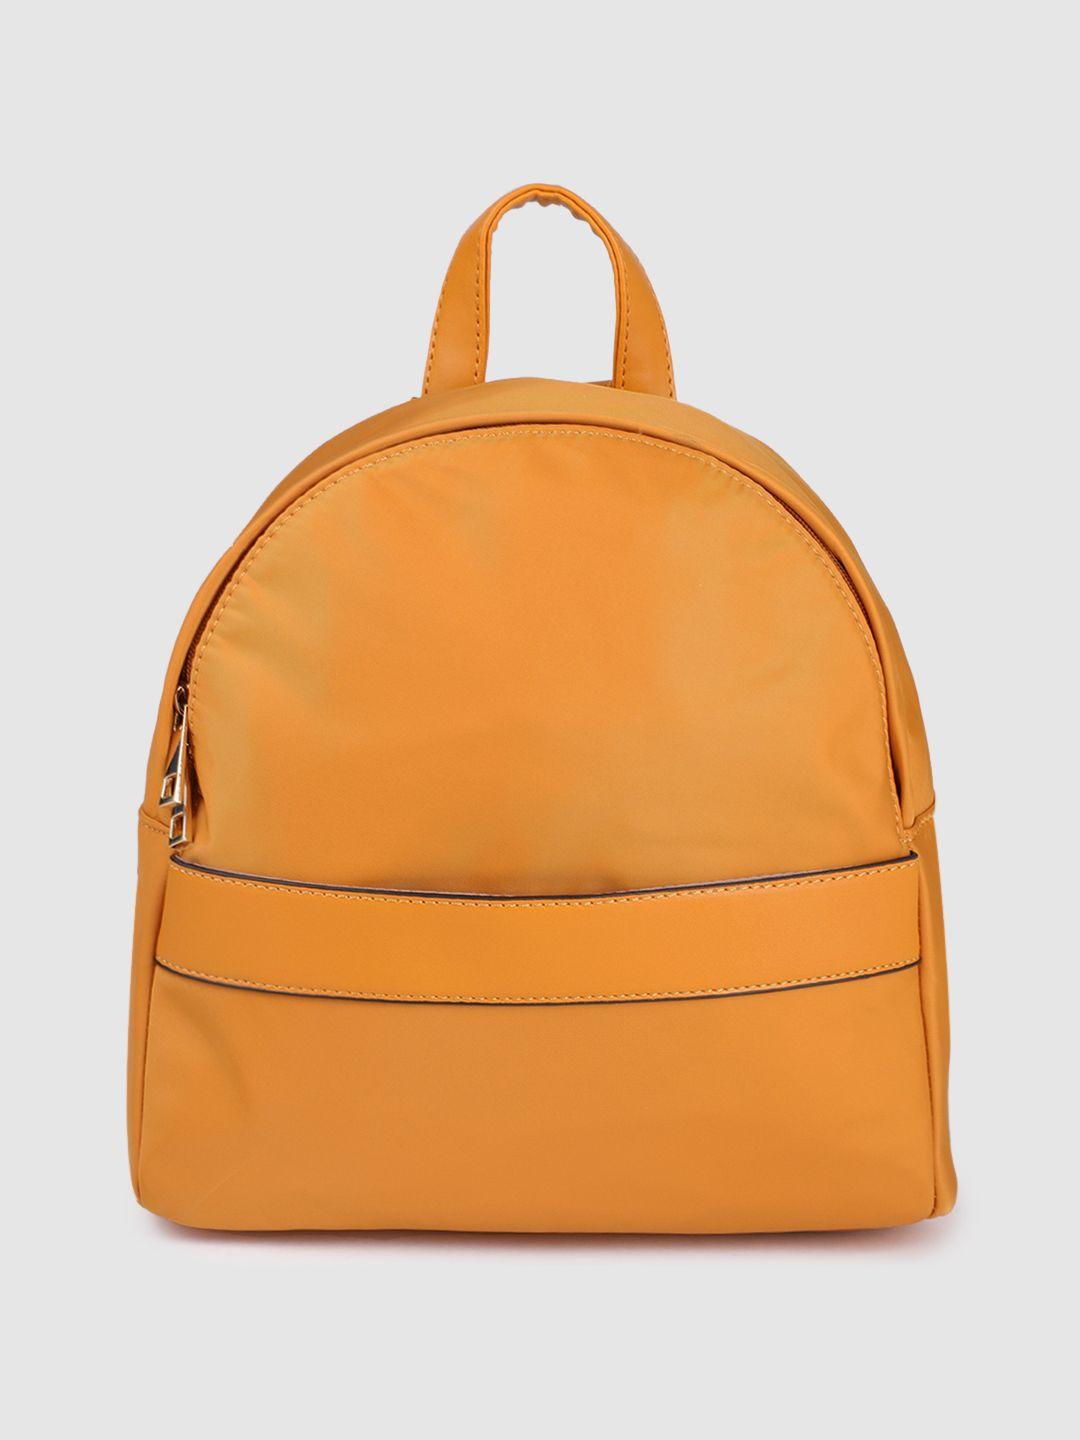 allen solly women mustard yellow solid backpack